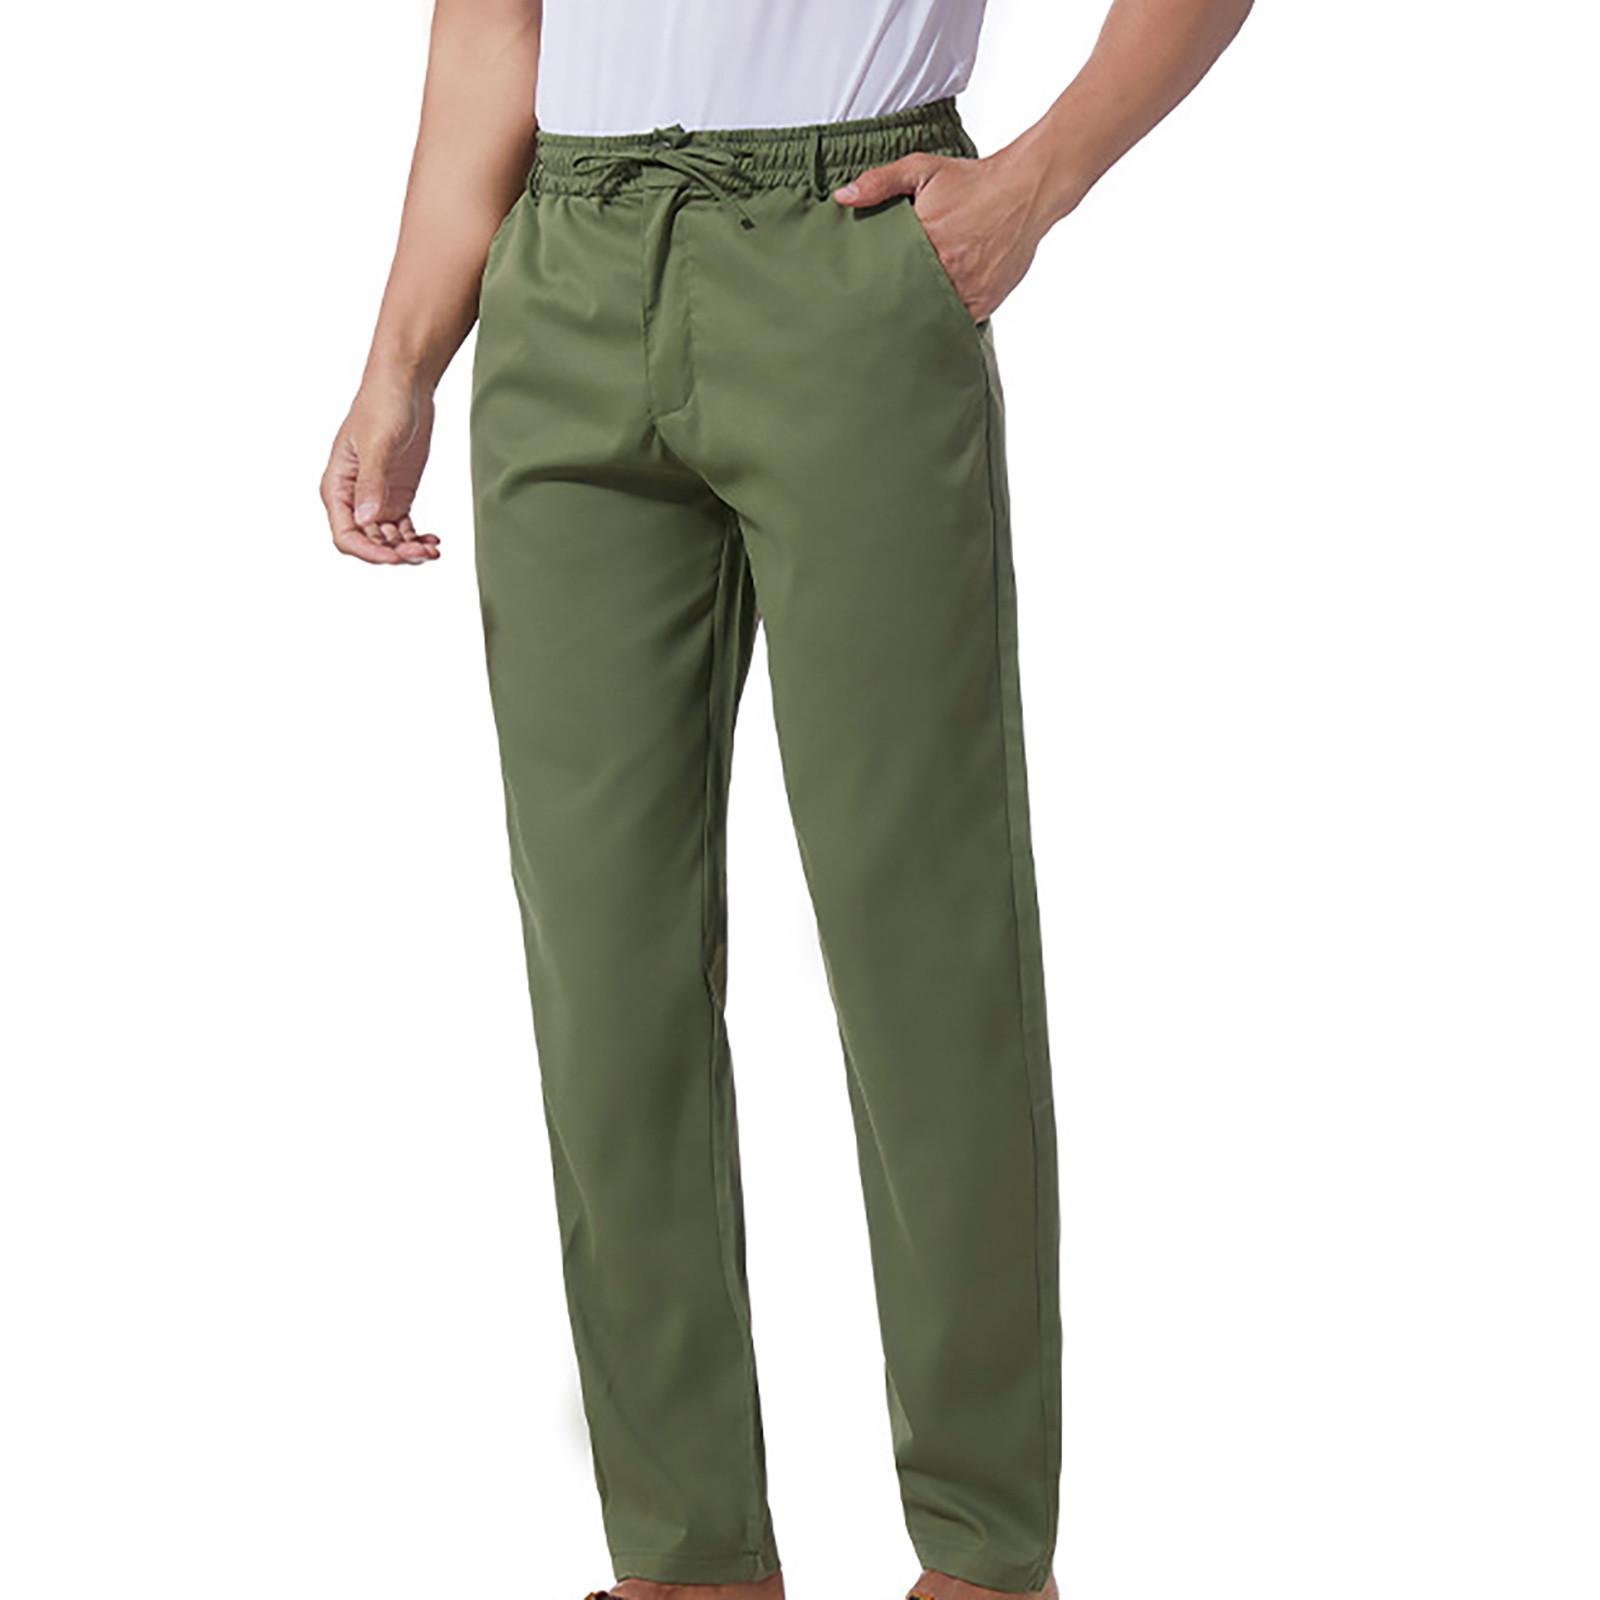 Tdoqot Chinos Pants Men- Casual Drawstring Comftable Elastic Waist Slim Cotton Mens Pants Army Green - image 1 of 6